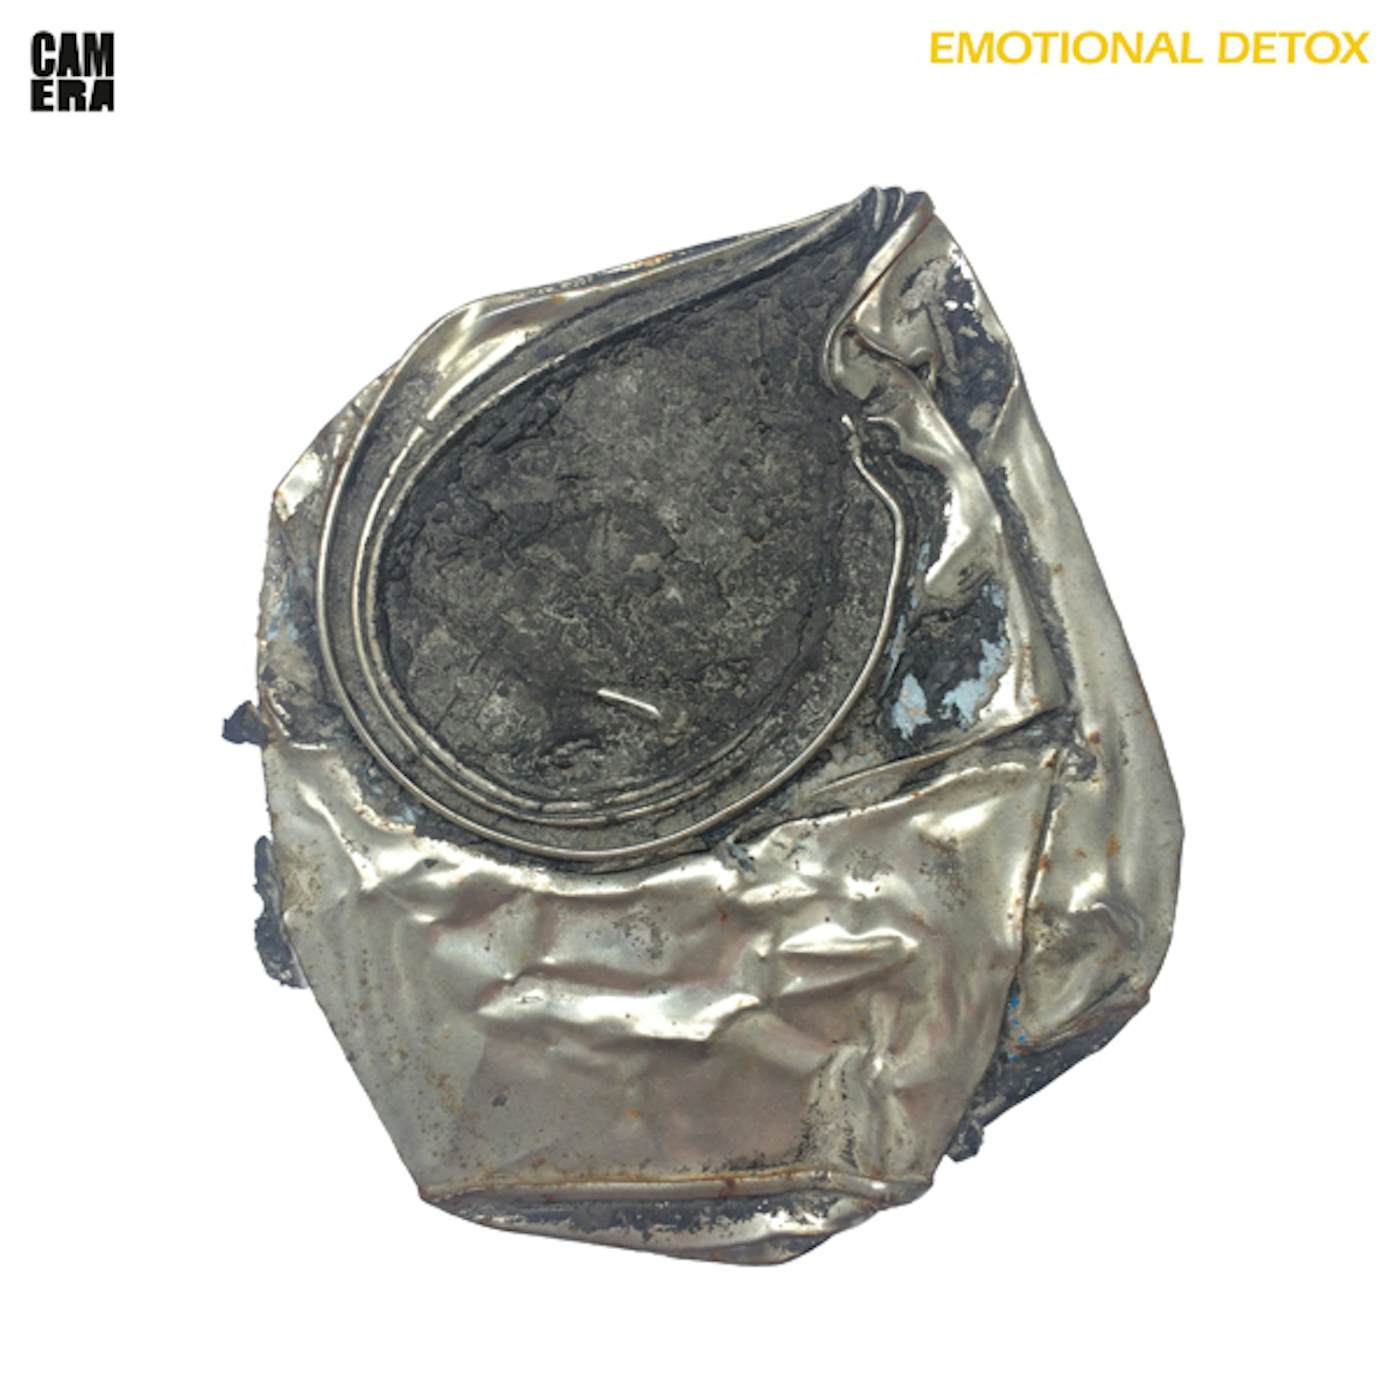 Camera Emotional Detox Vinyl Record